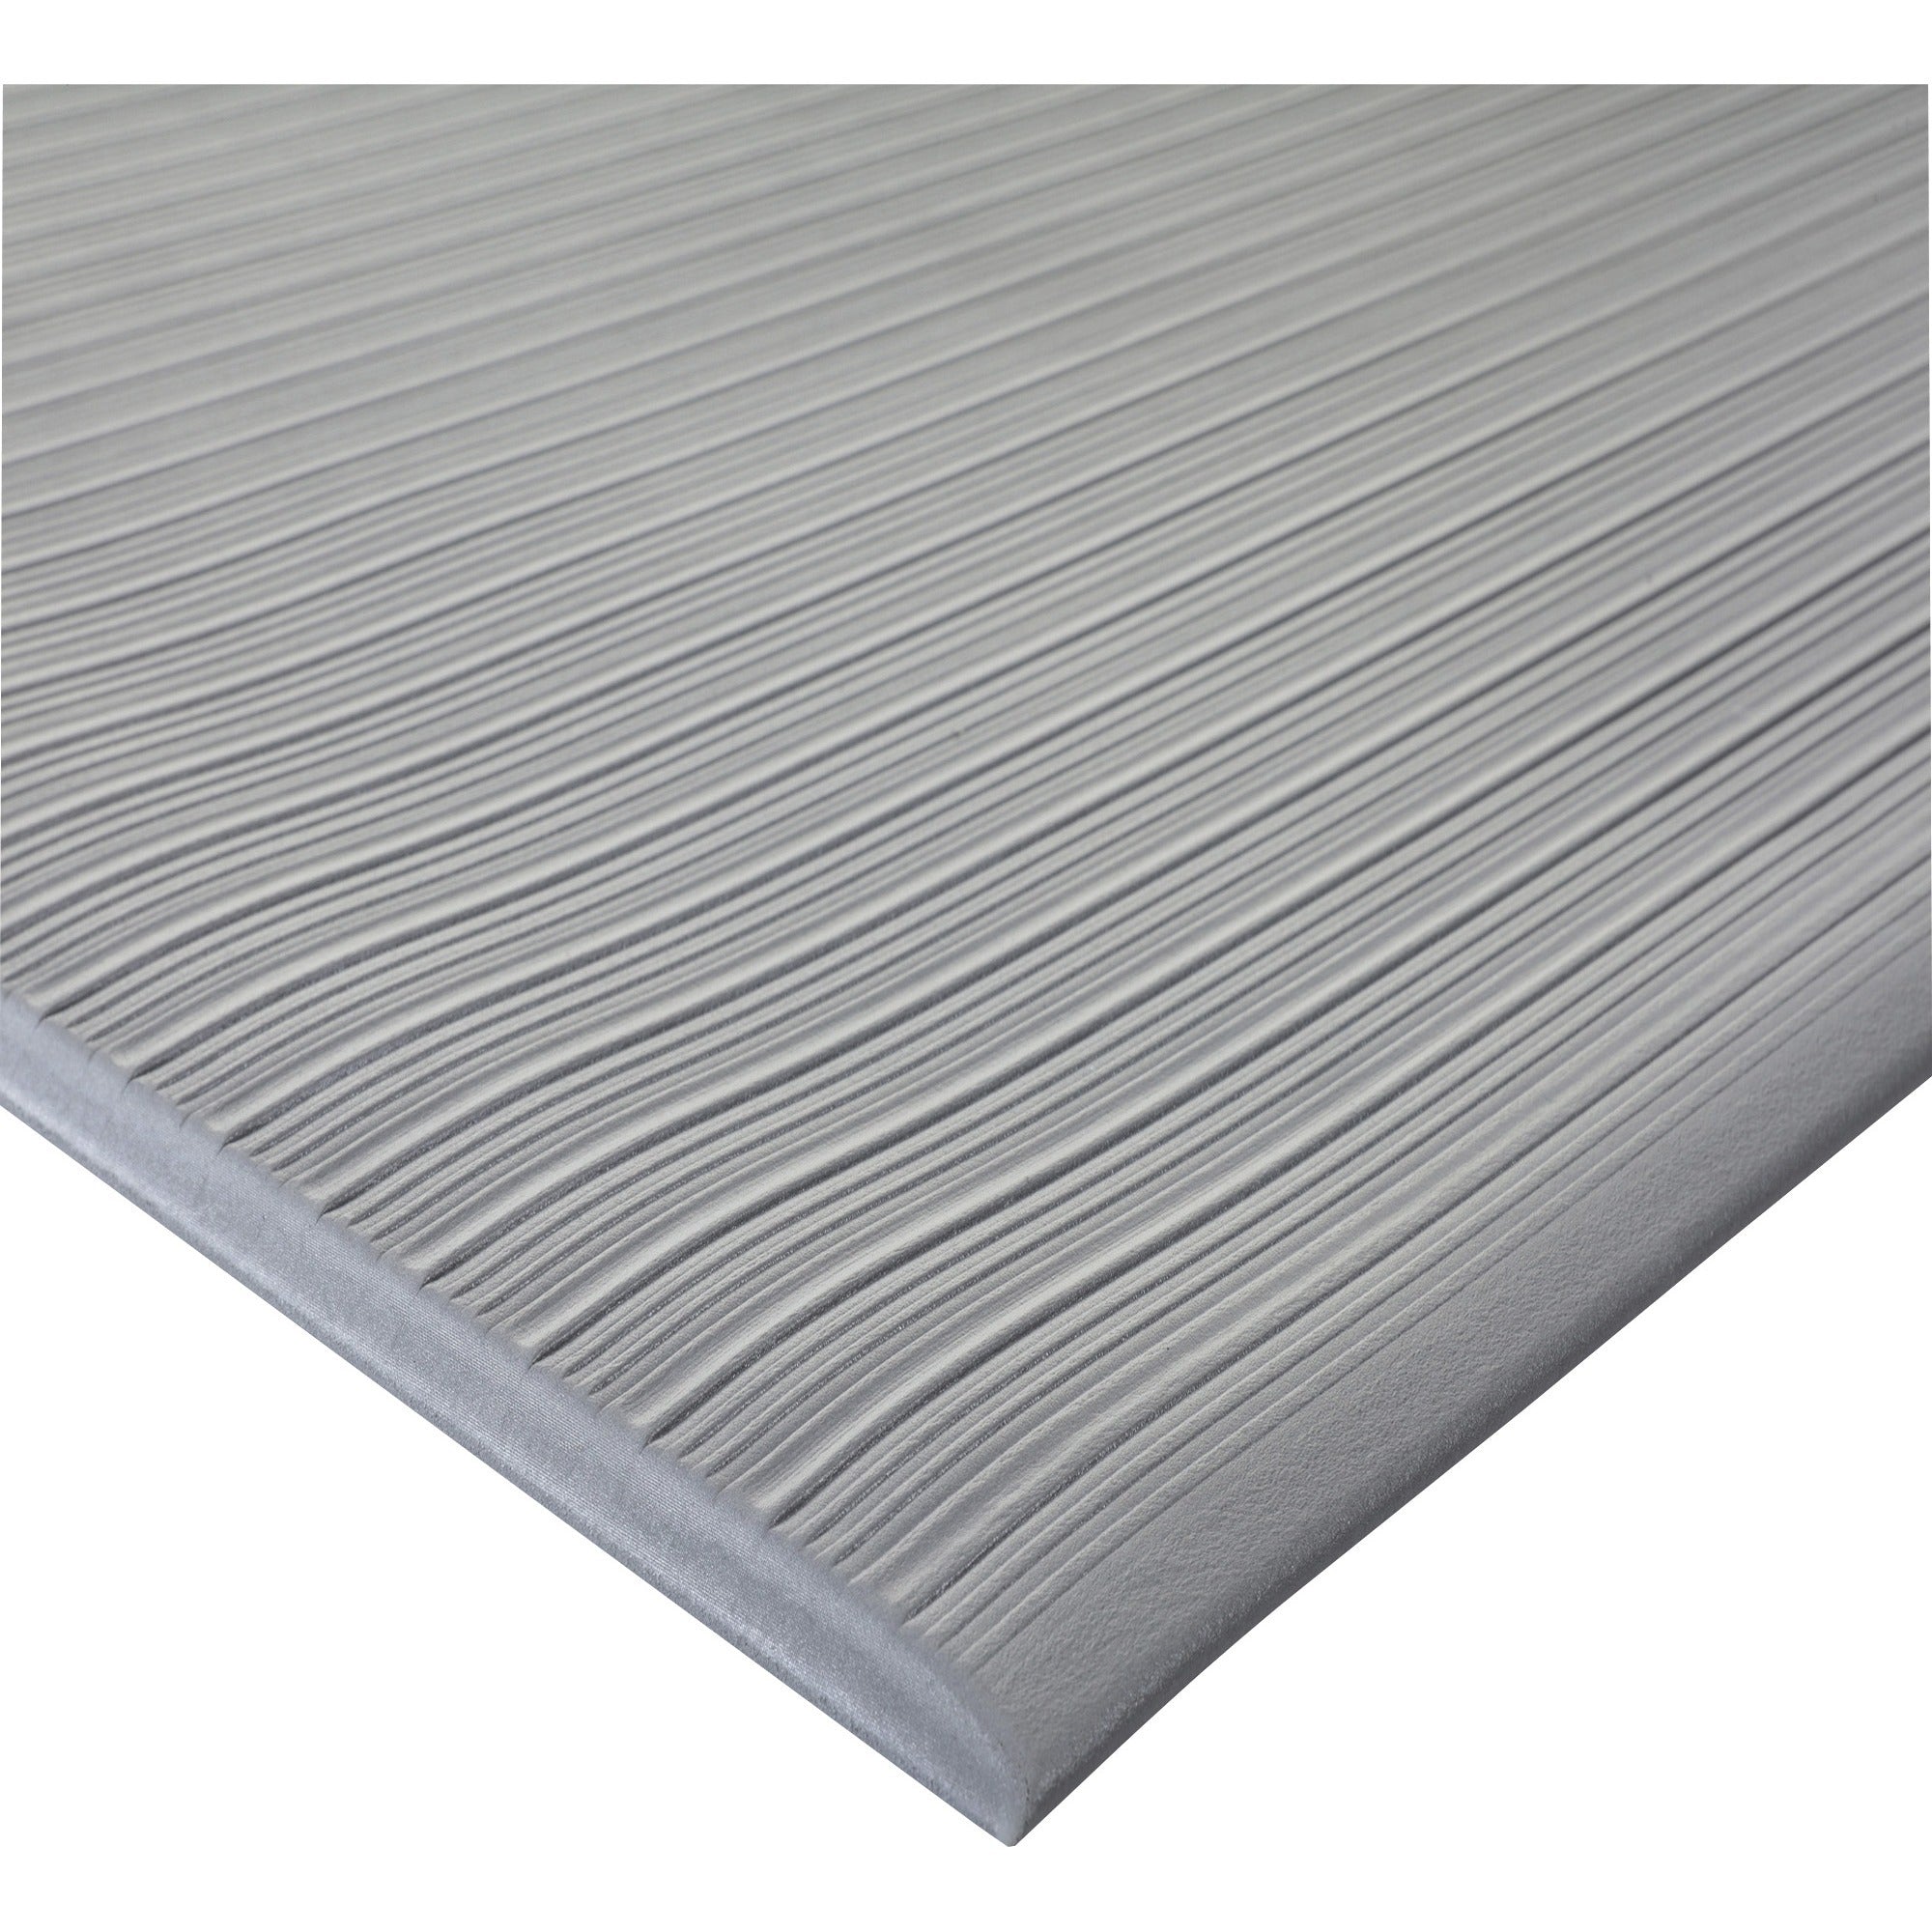 genuine-joe-air-step-mat-multipurpose-36-length-x-24-width-x-0375-thickness-rectangular-vinyl-foam-gray-1each_gjo00085 - 1